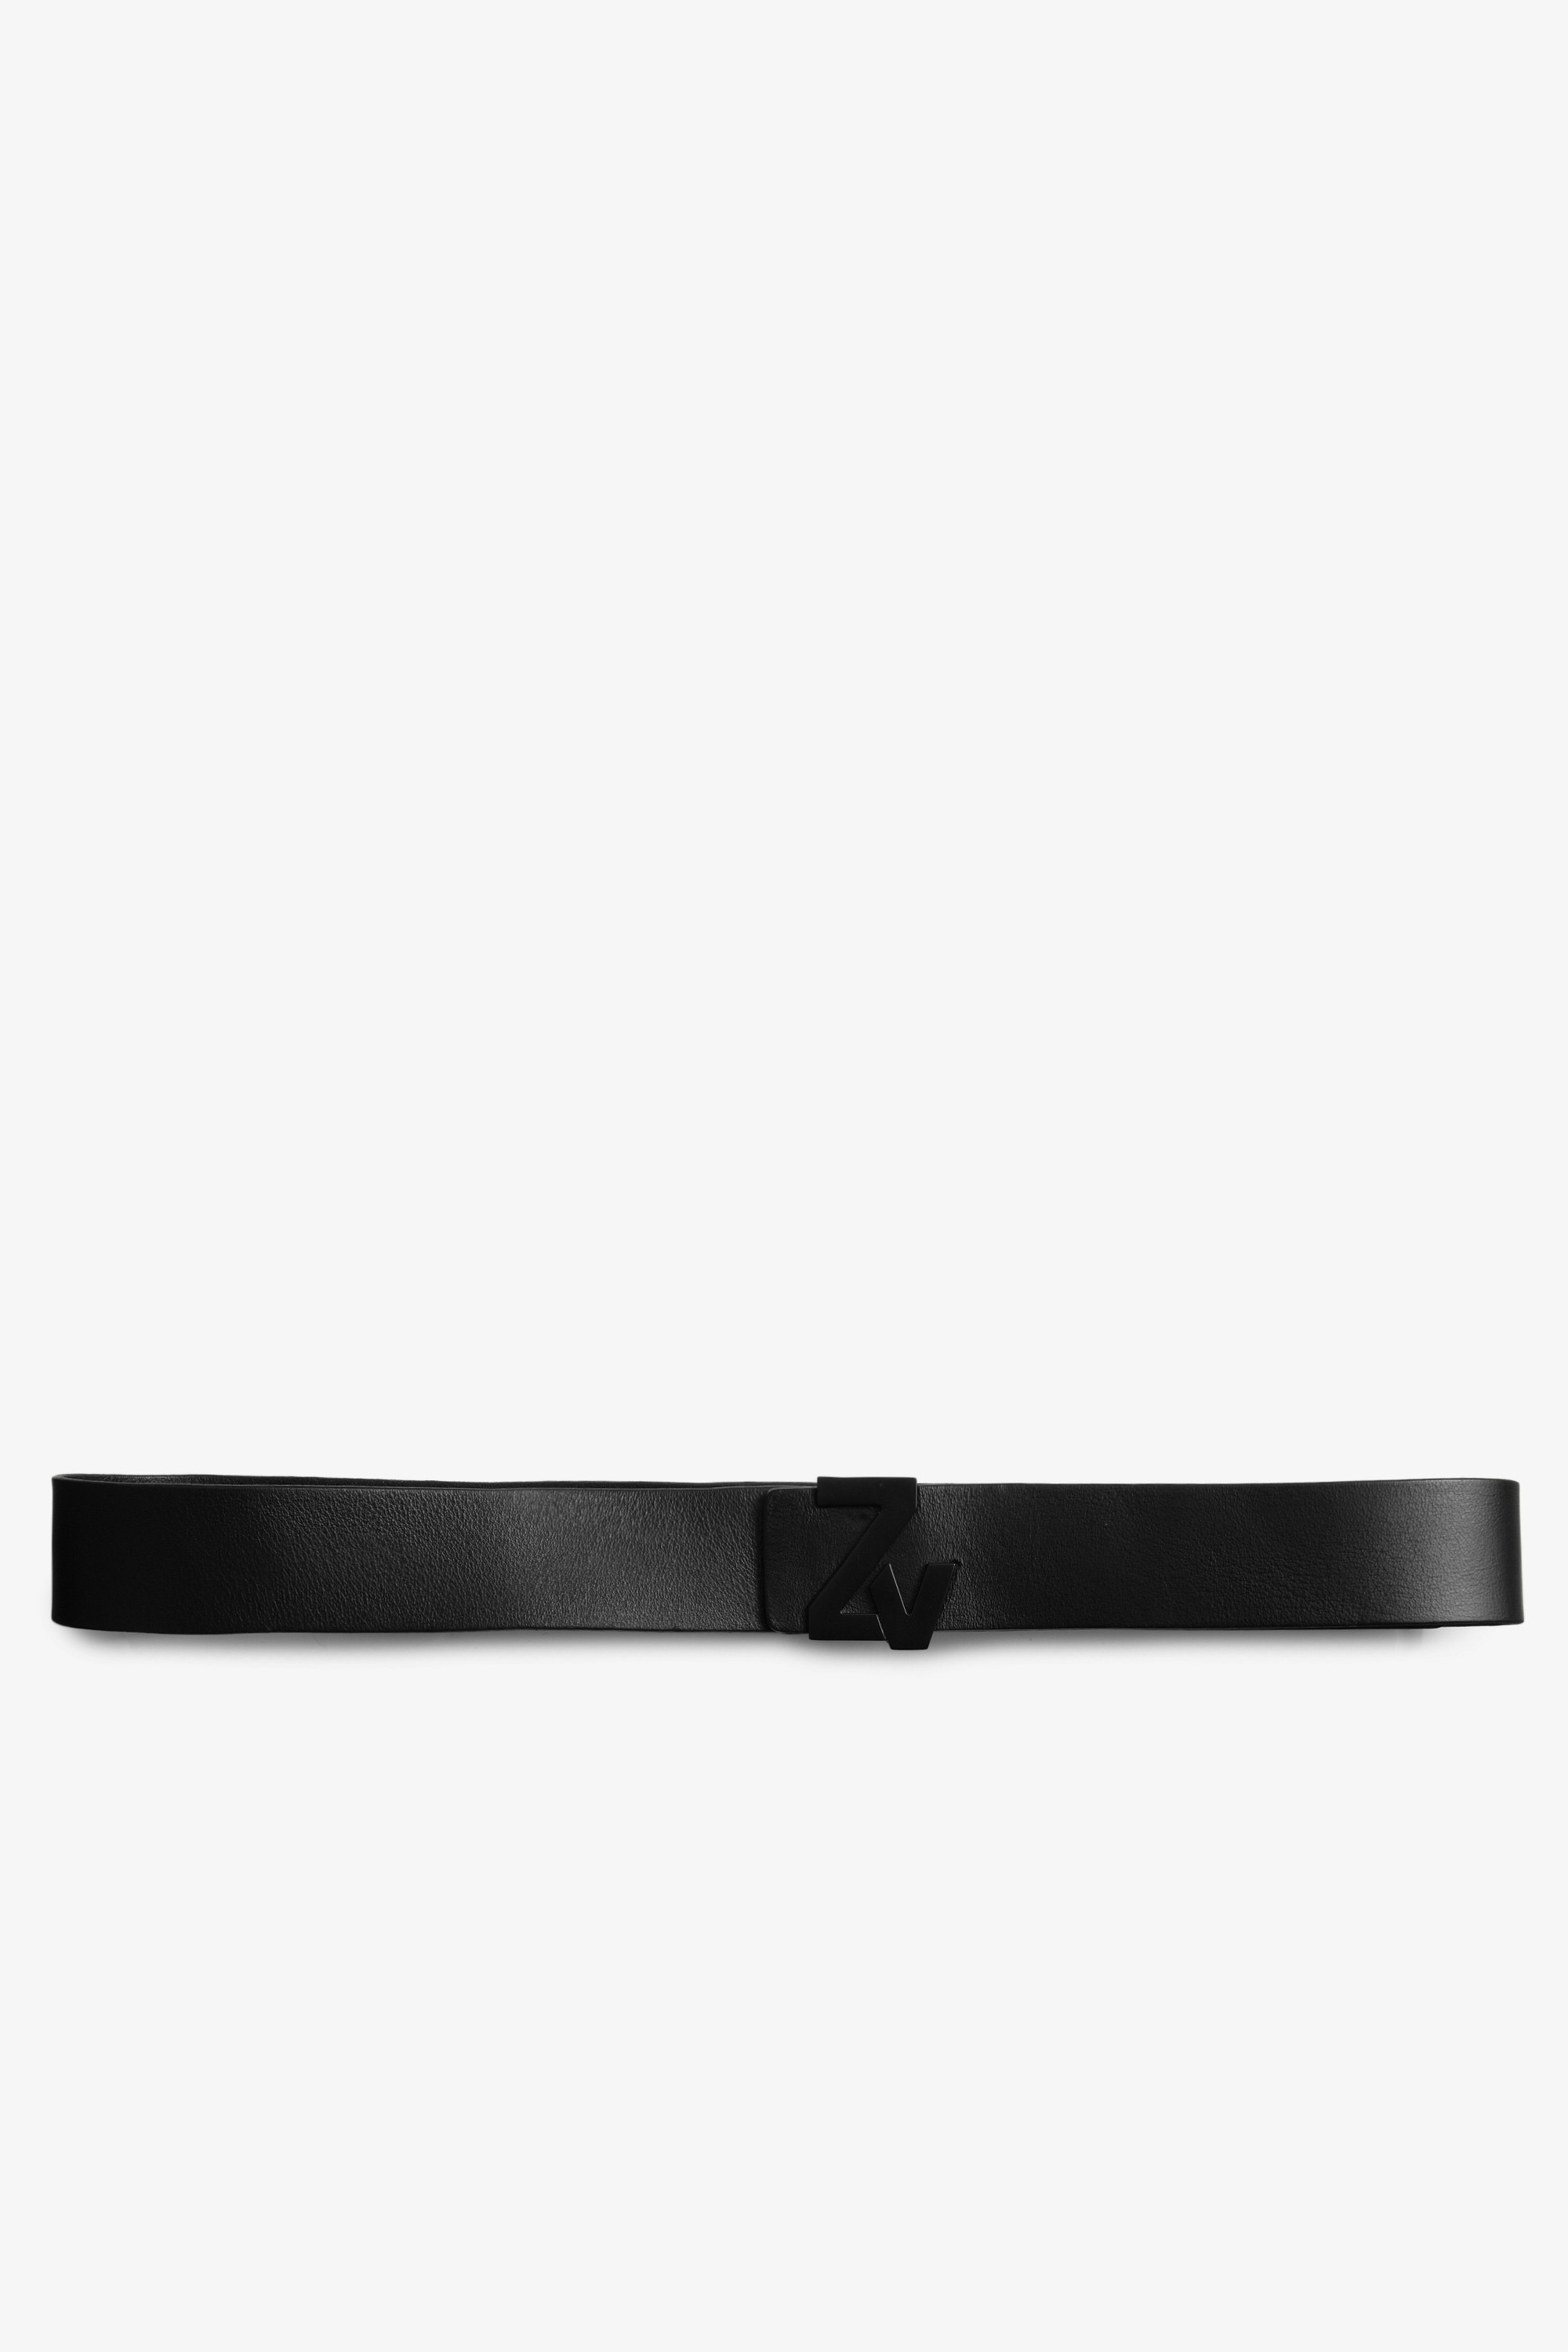 ZV Initiale La Belt Leather Men's black leather belt with ZV buckle